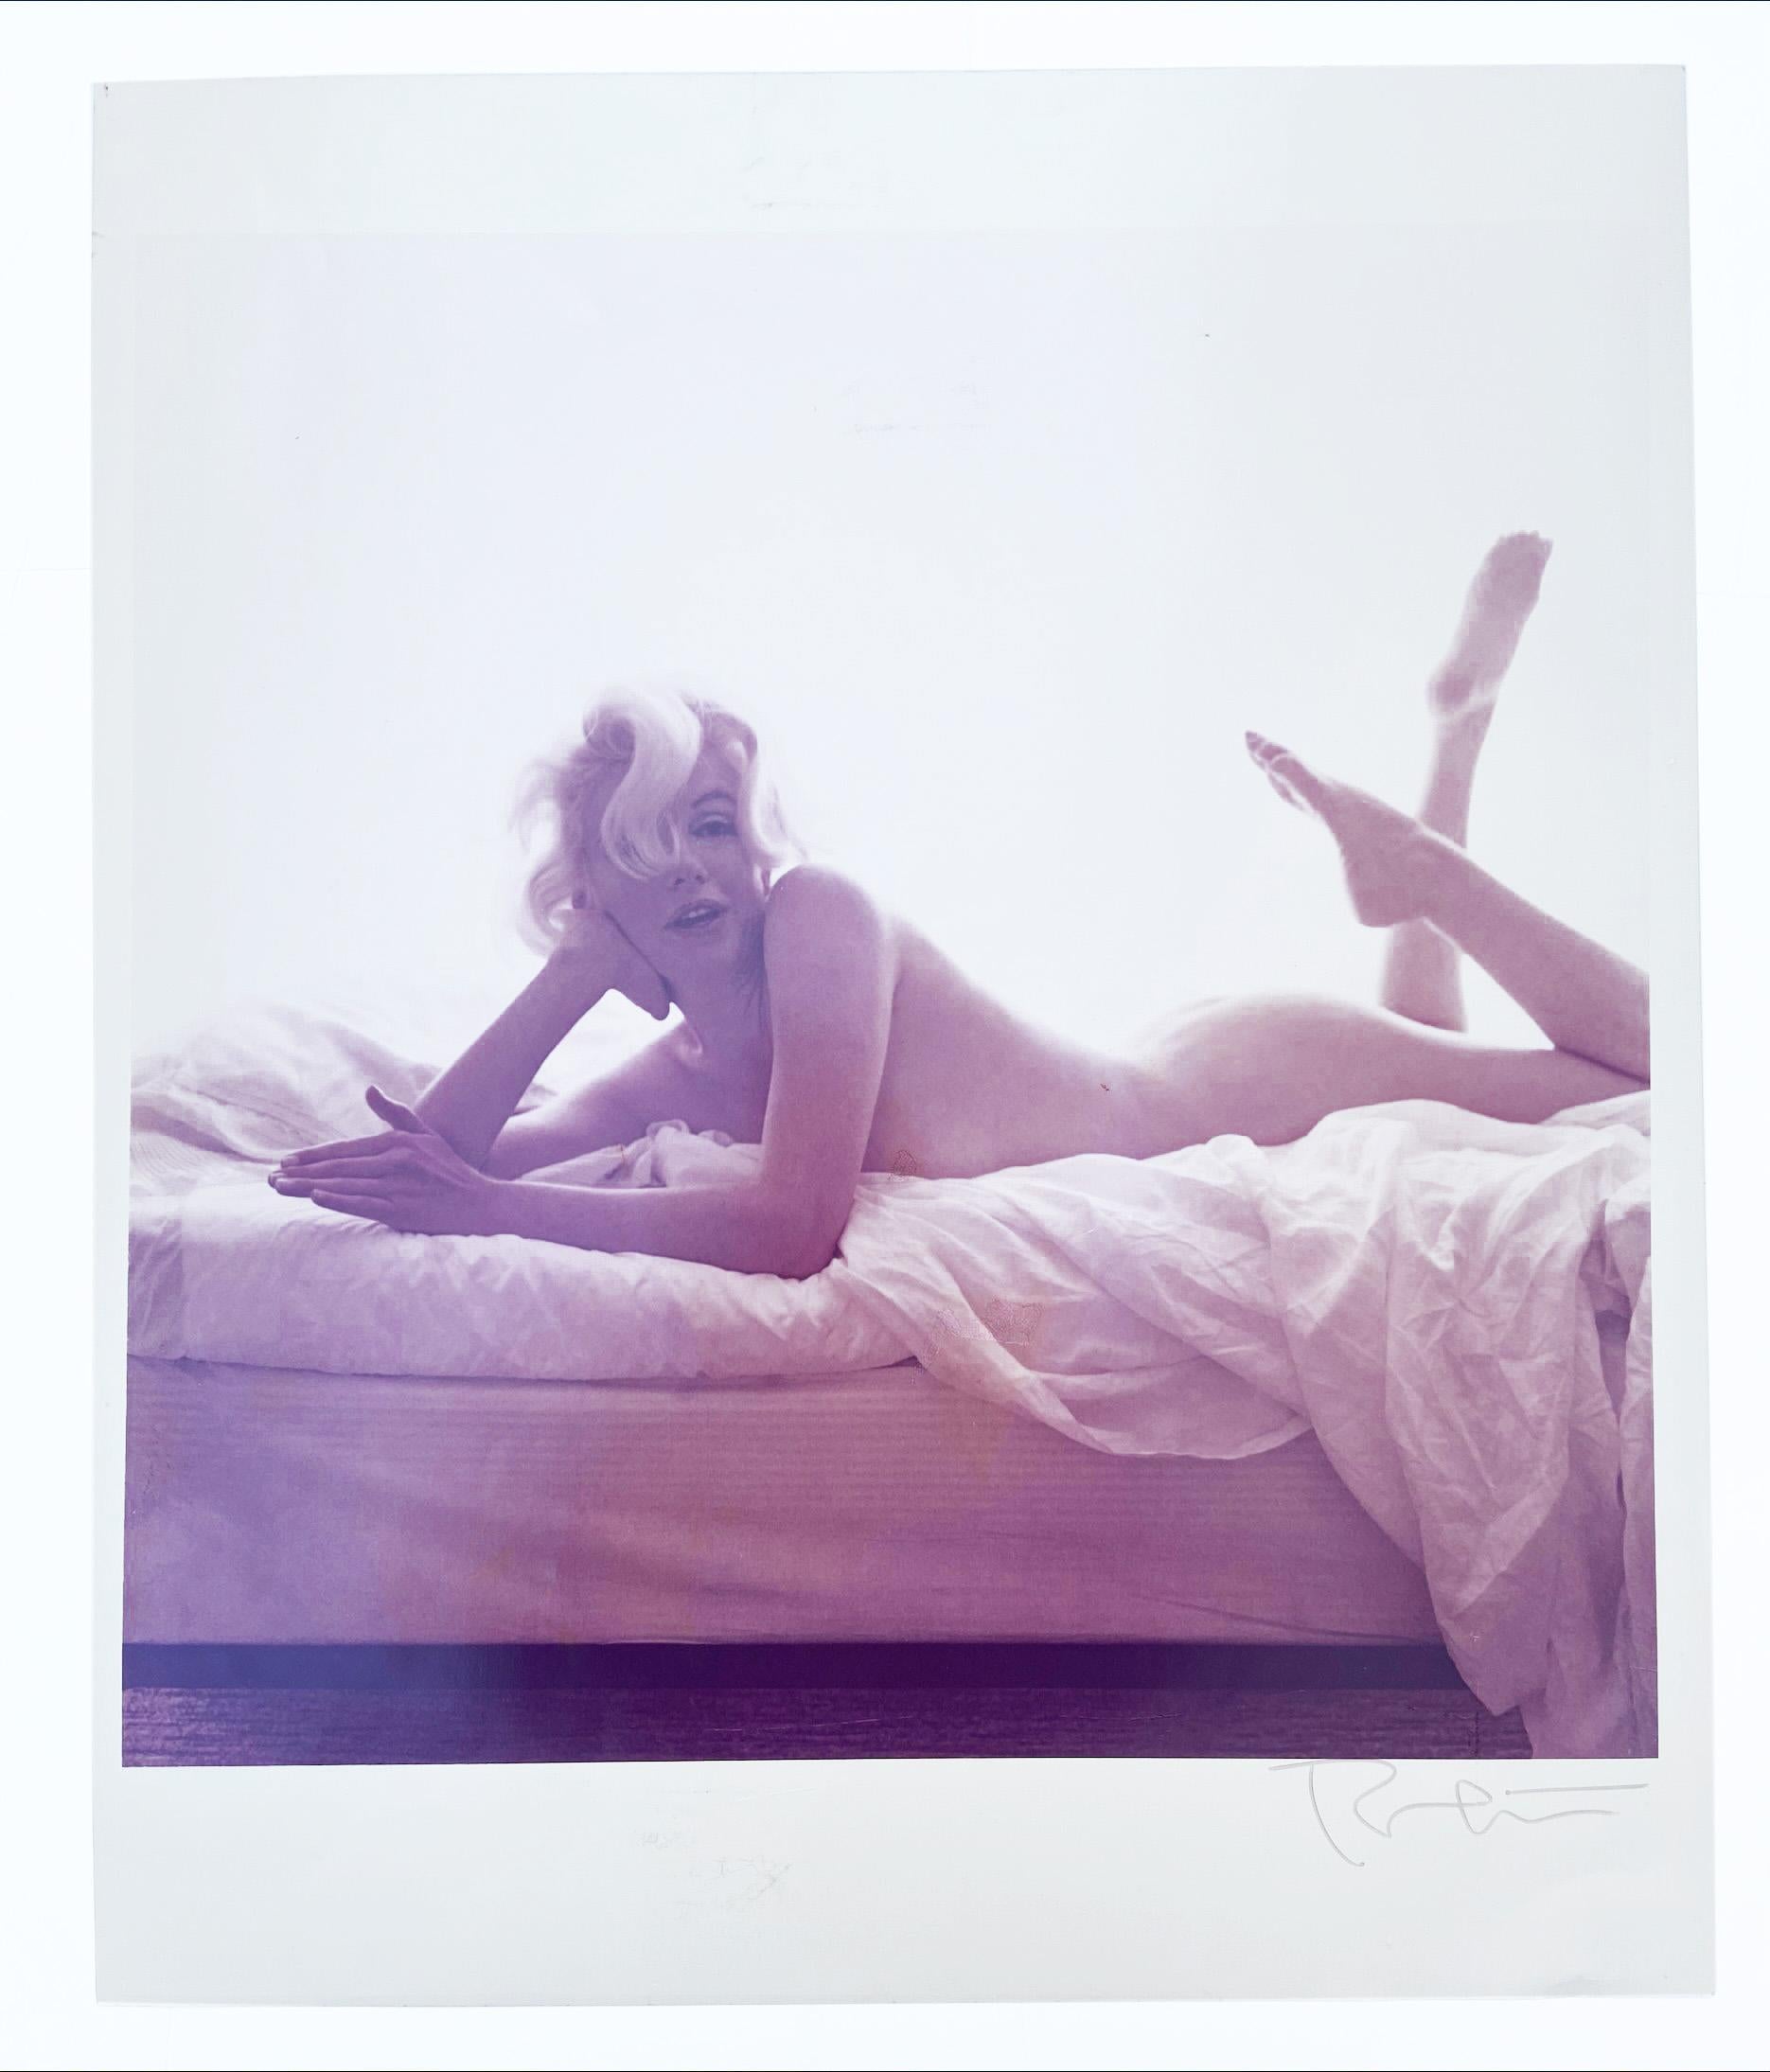 Bert Stern - Marilyn Monroe, the last sitting - 1962